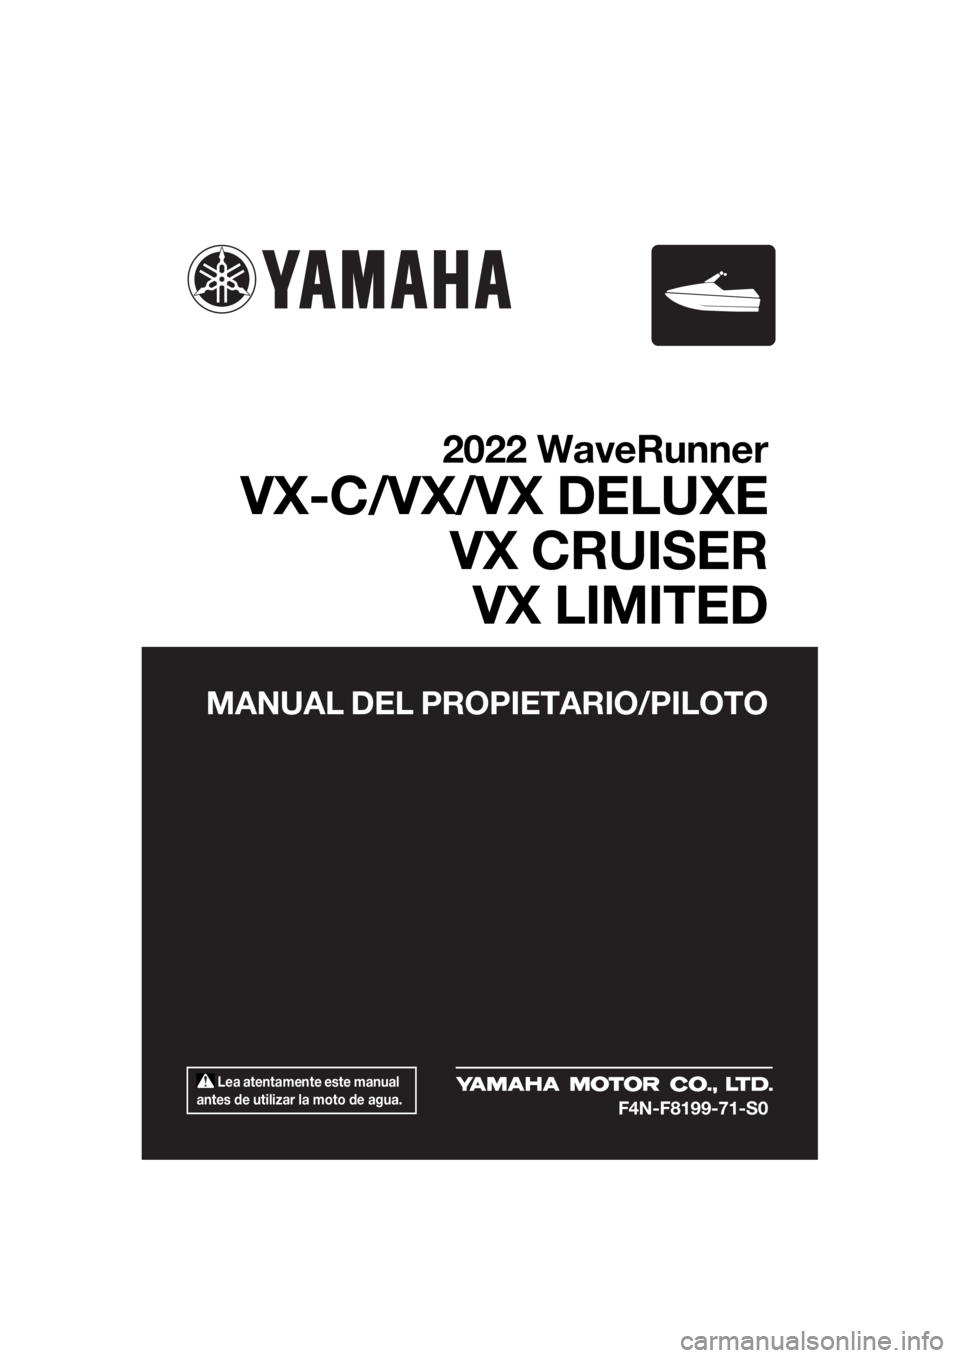 YAMAHA VX DELUXE 2022  Manuale de Empleo (in Spanish)  Lea atentamente este manual 
antes de utilizar la moto de agua.
MANUAL DEL PROPIETARIO/PILOTO
2022 WaveRunner
VX-C/VX/VX DELUXE VX CRUISERVX LIMITED
F4N-F8199-71-S0
UF4N71S0.book  Page 1  Thursday, A